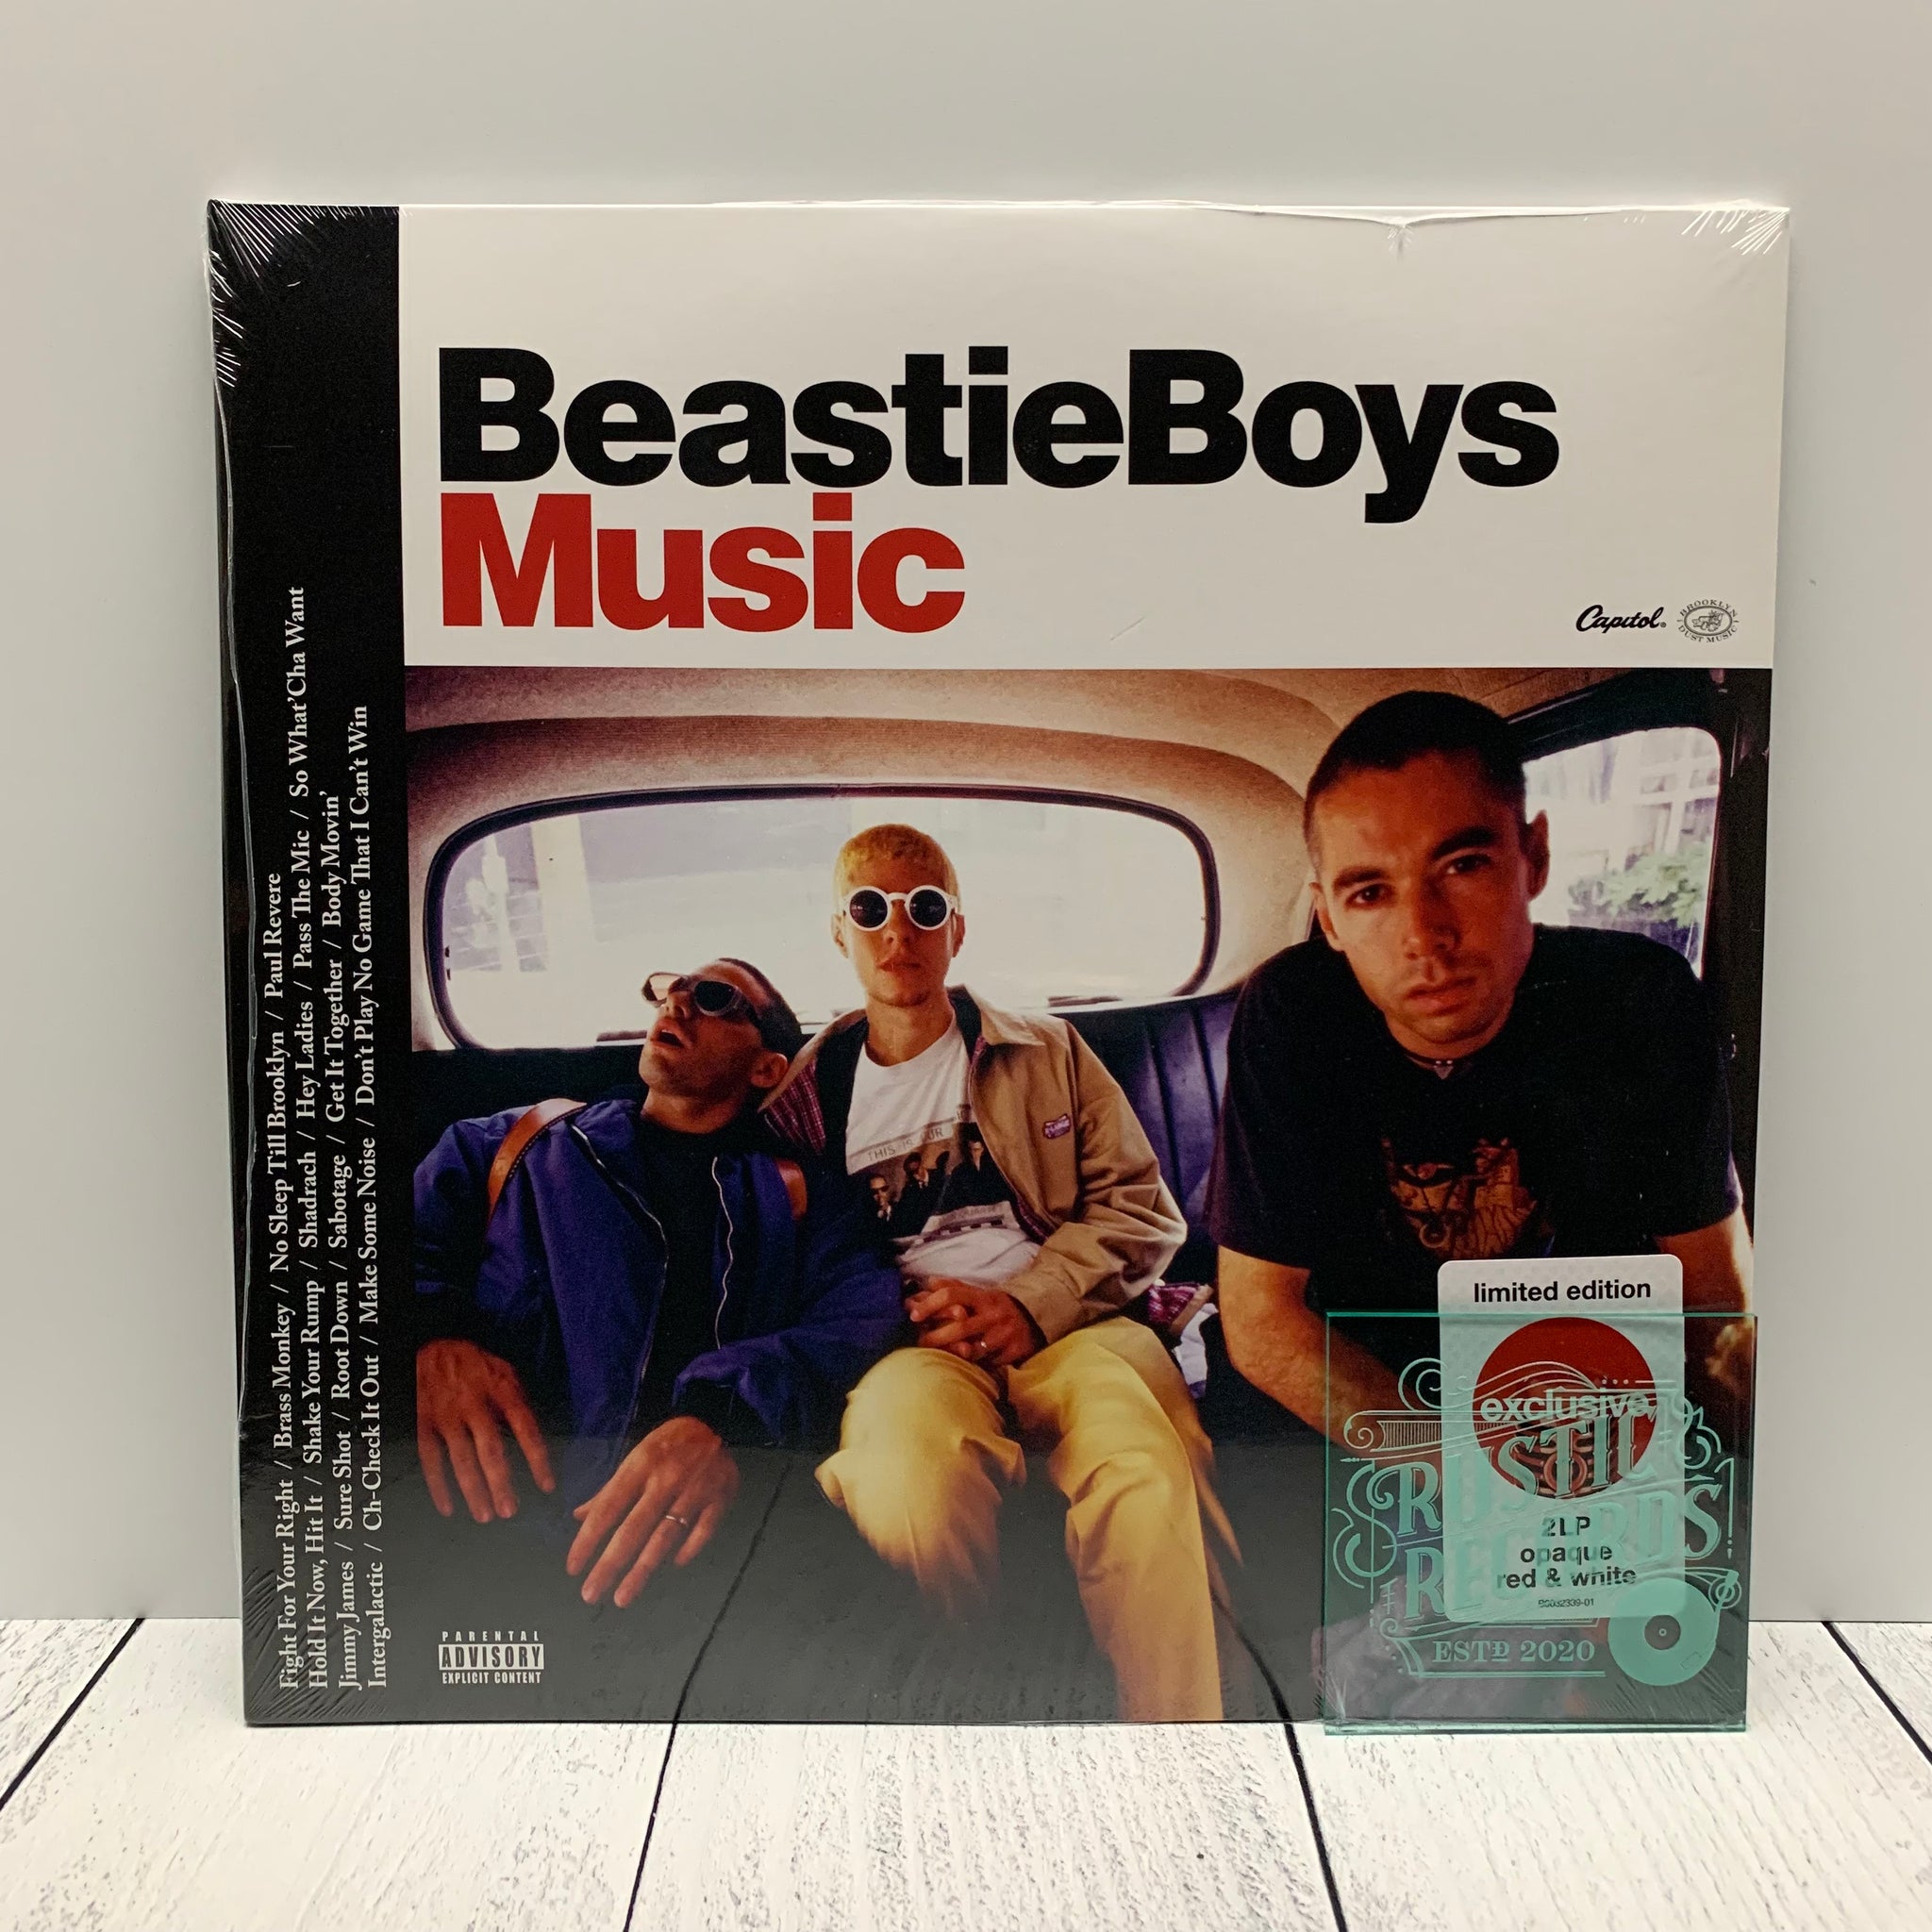 Beastie Boys - Beastie Boys Music